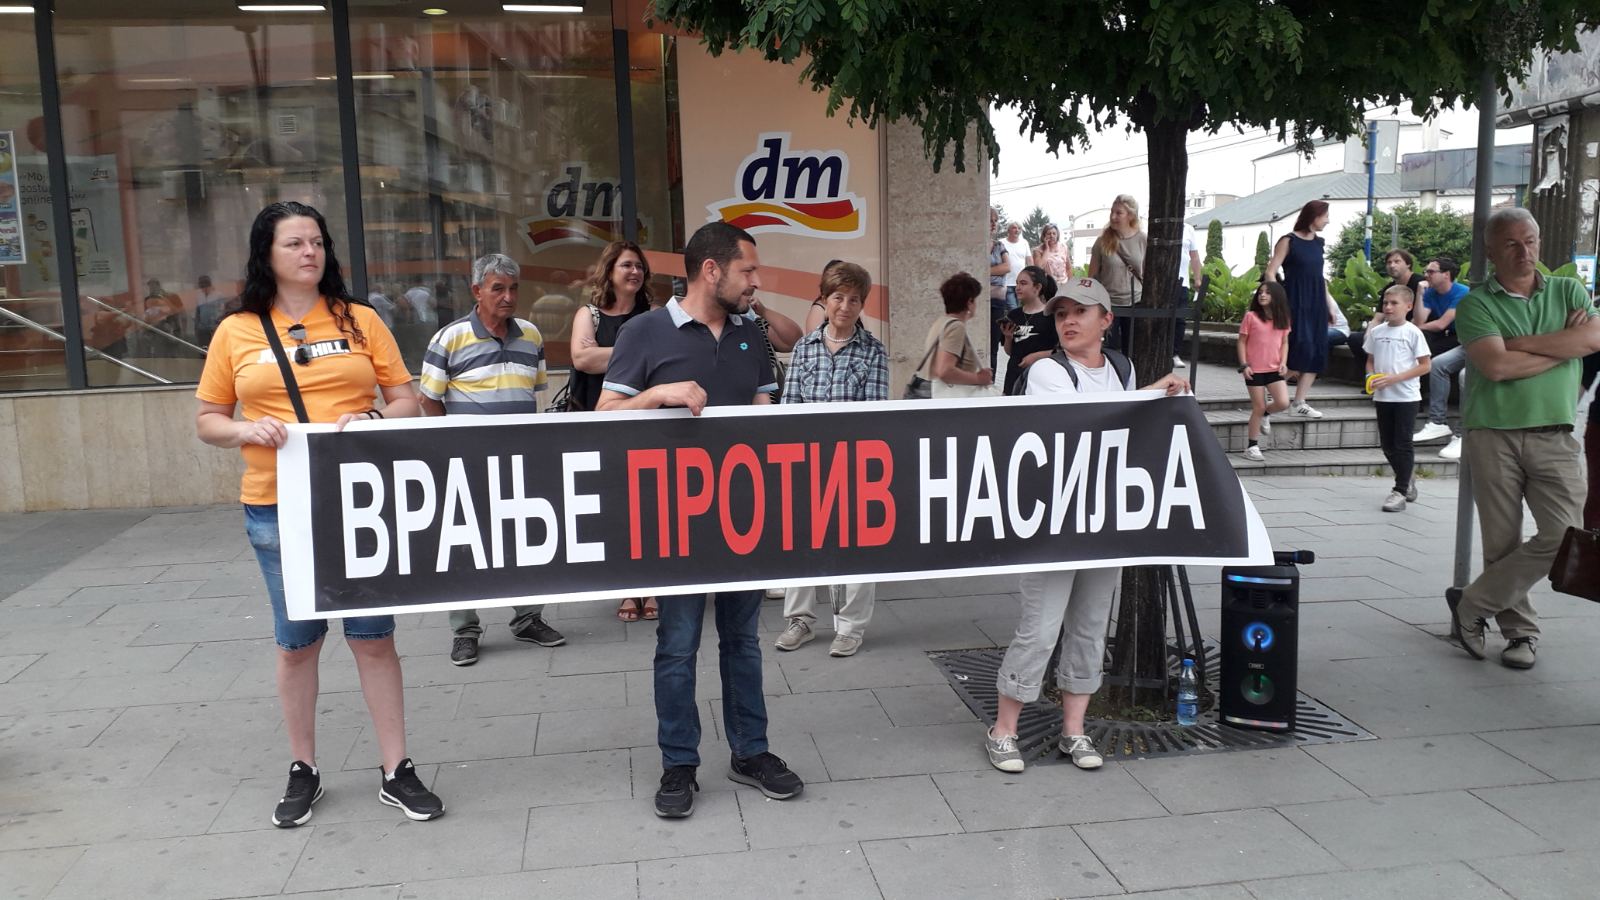 Protest "Srbija protiv nasilja" u preko 10 gradova obeležile šetnje, blokade puteva i zahtevi za ostavkama (FOTO, VIDEO) 98